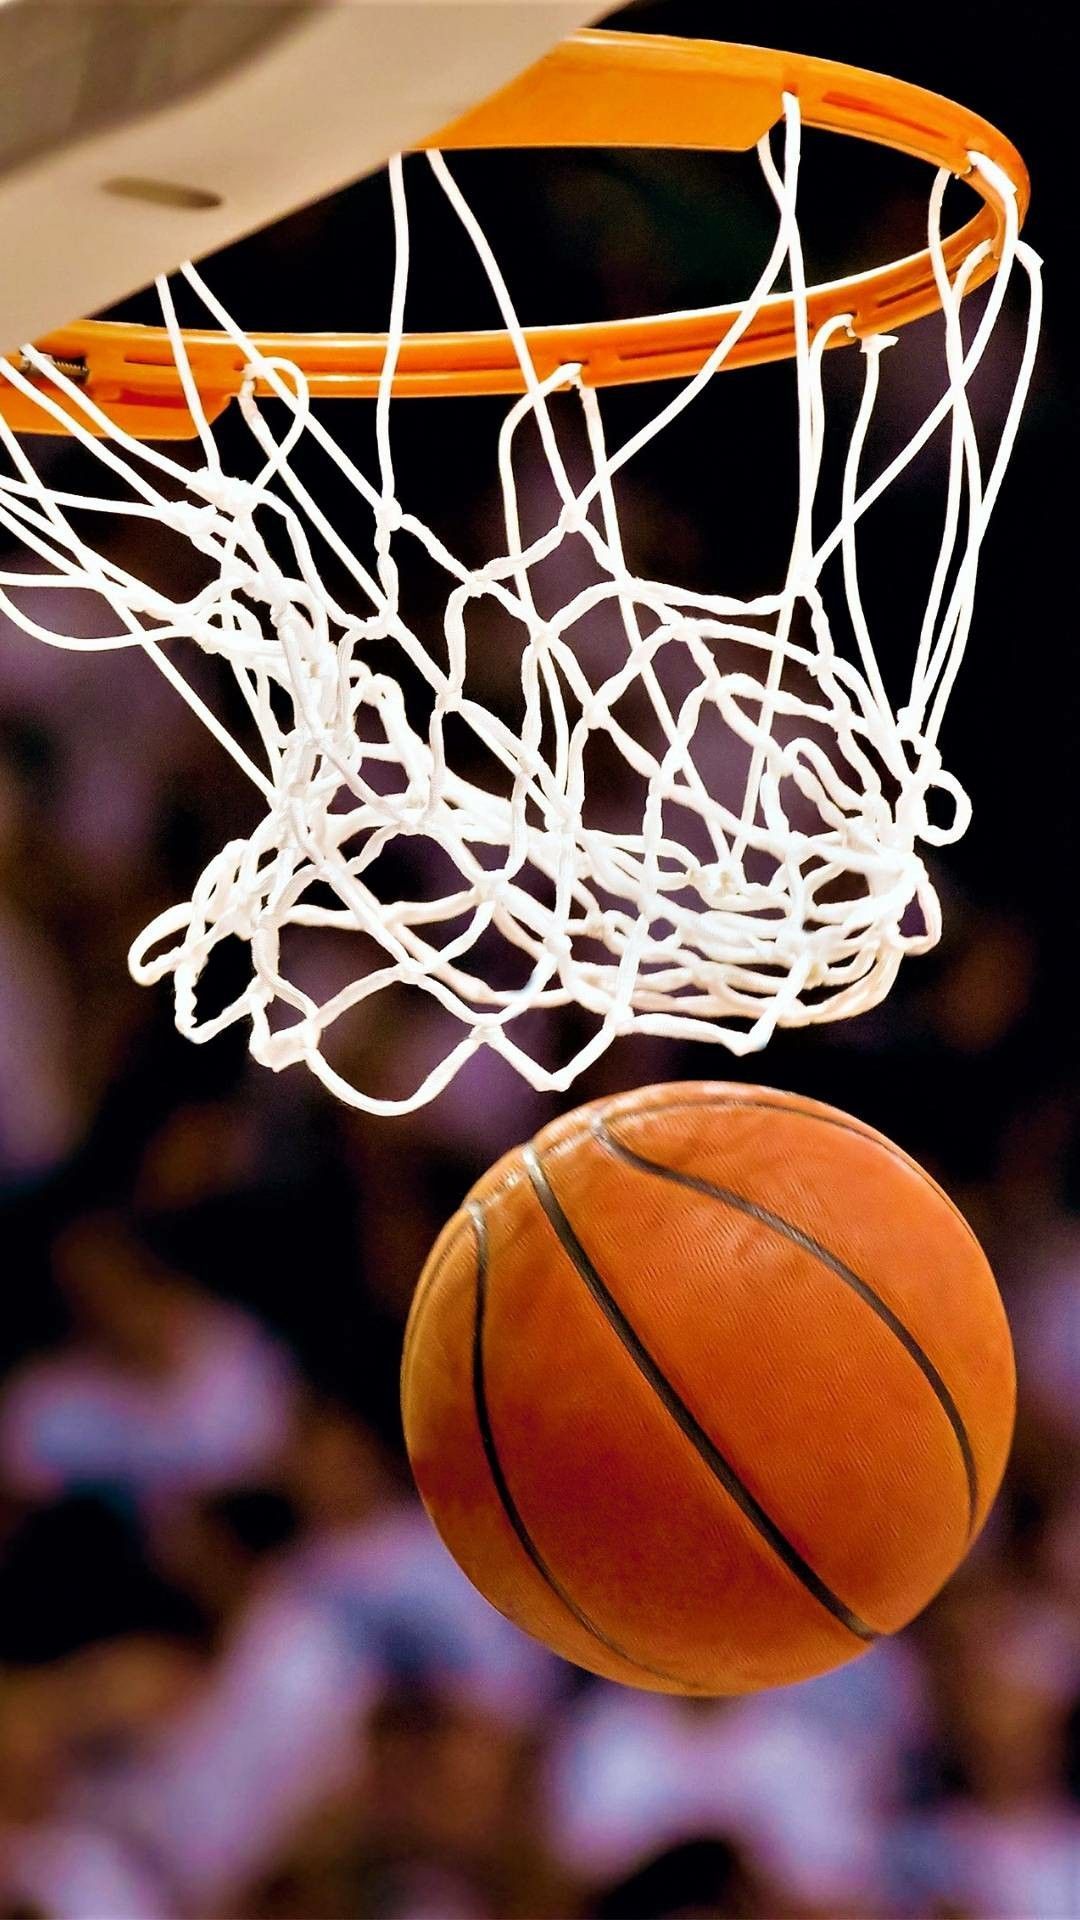 Basketball hoop wallpaper. Basketball hoop, Cool basketball wallpaper, Basketball wallpaper